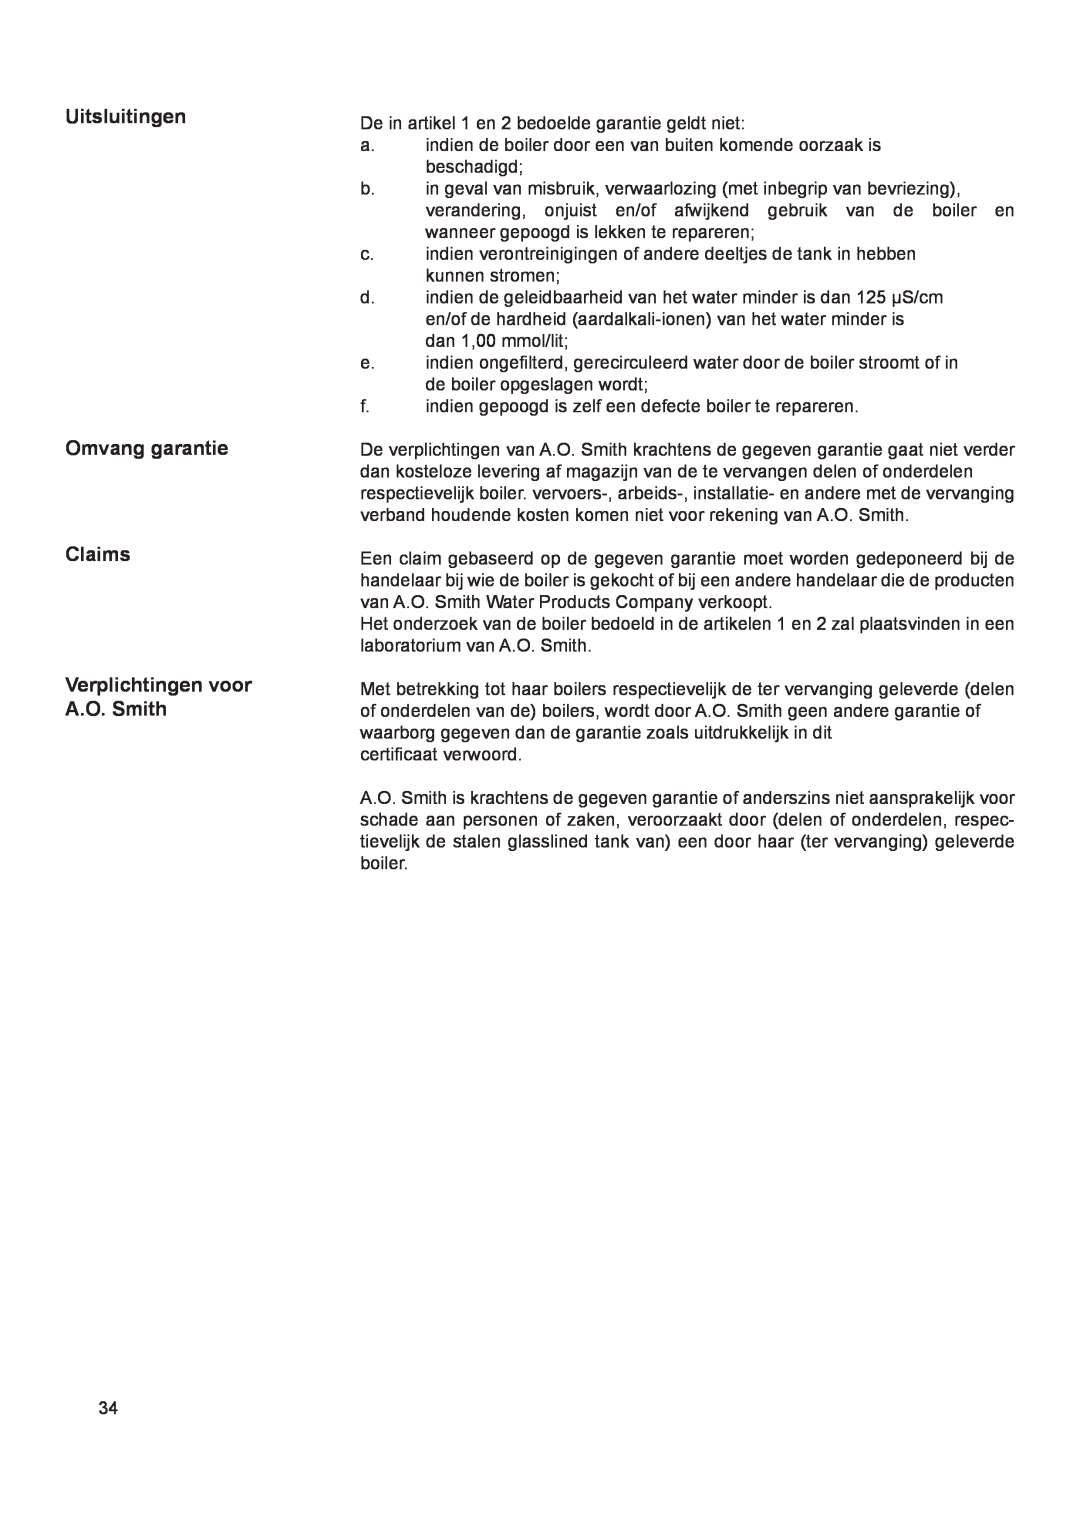 A.O. Smith 290 service manual Uitsluitingen Omvang garantie Claims, Verplichtingen voor A.O. Smith 